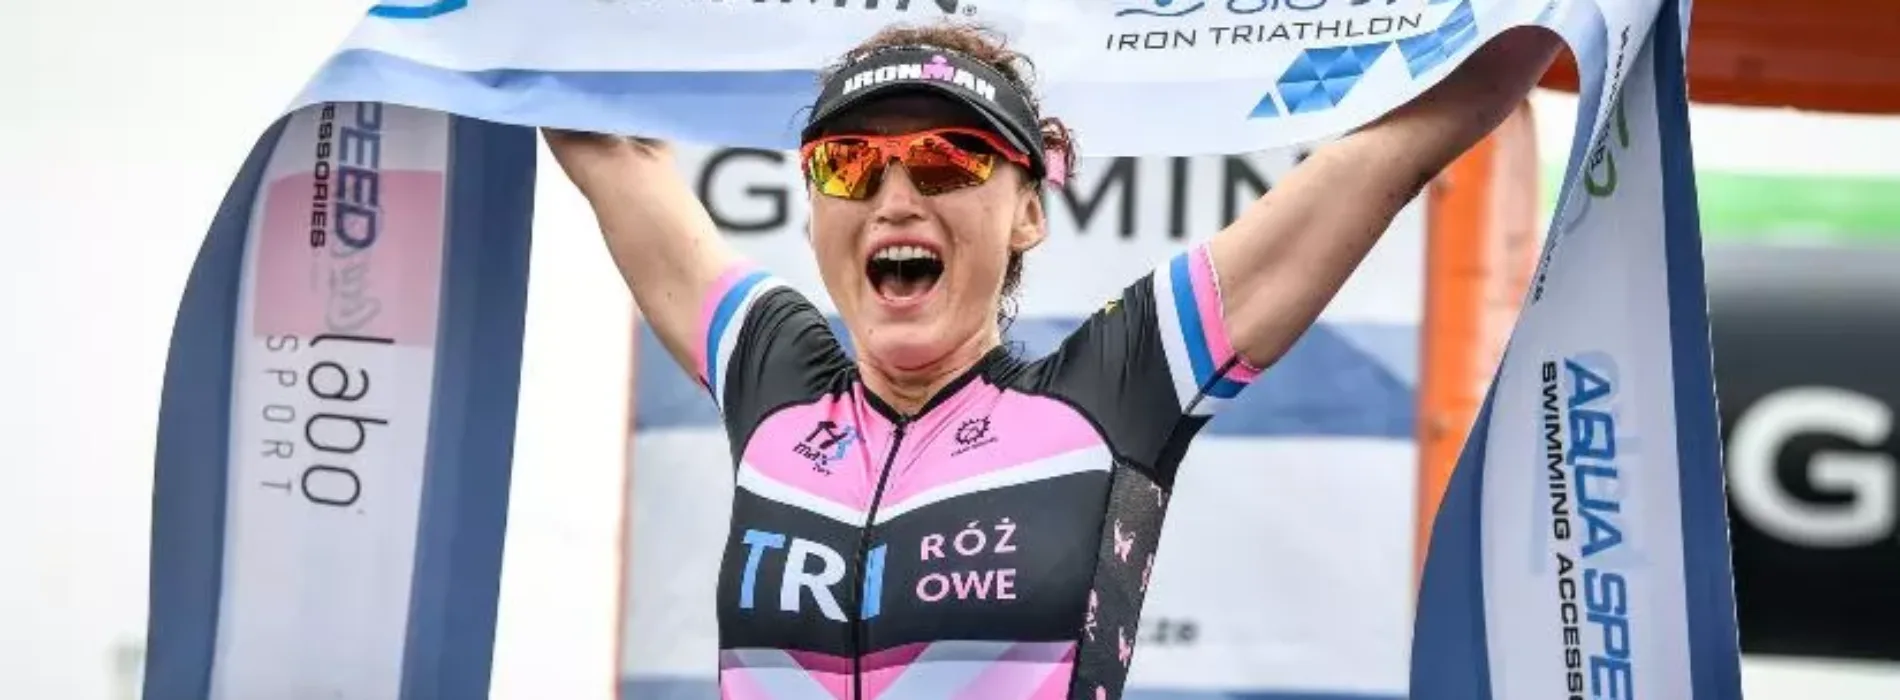 Sabina Bartecka triumfuje w Garmin Iron Triathlon!